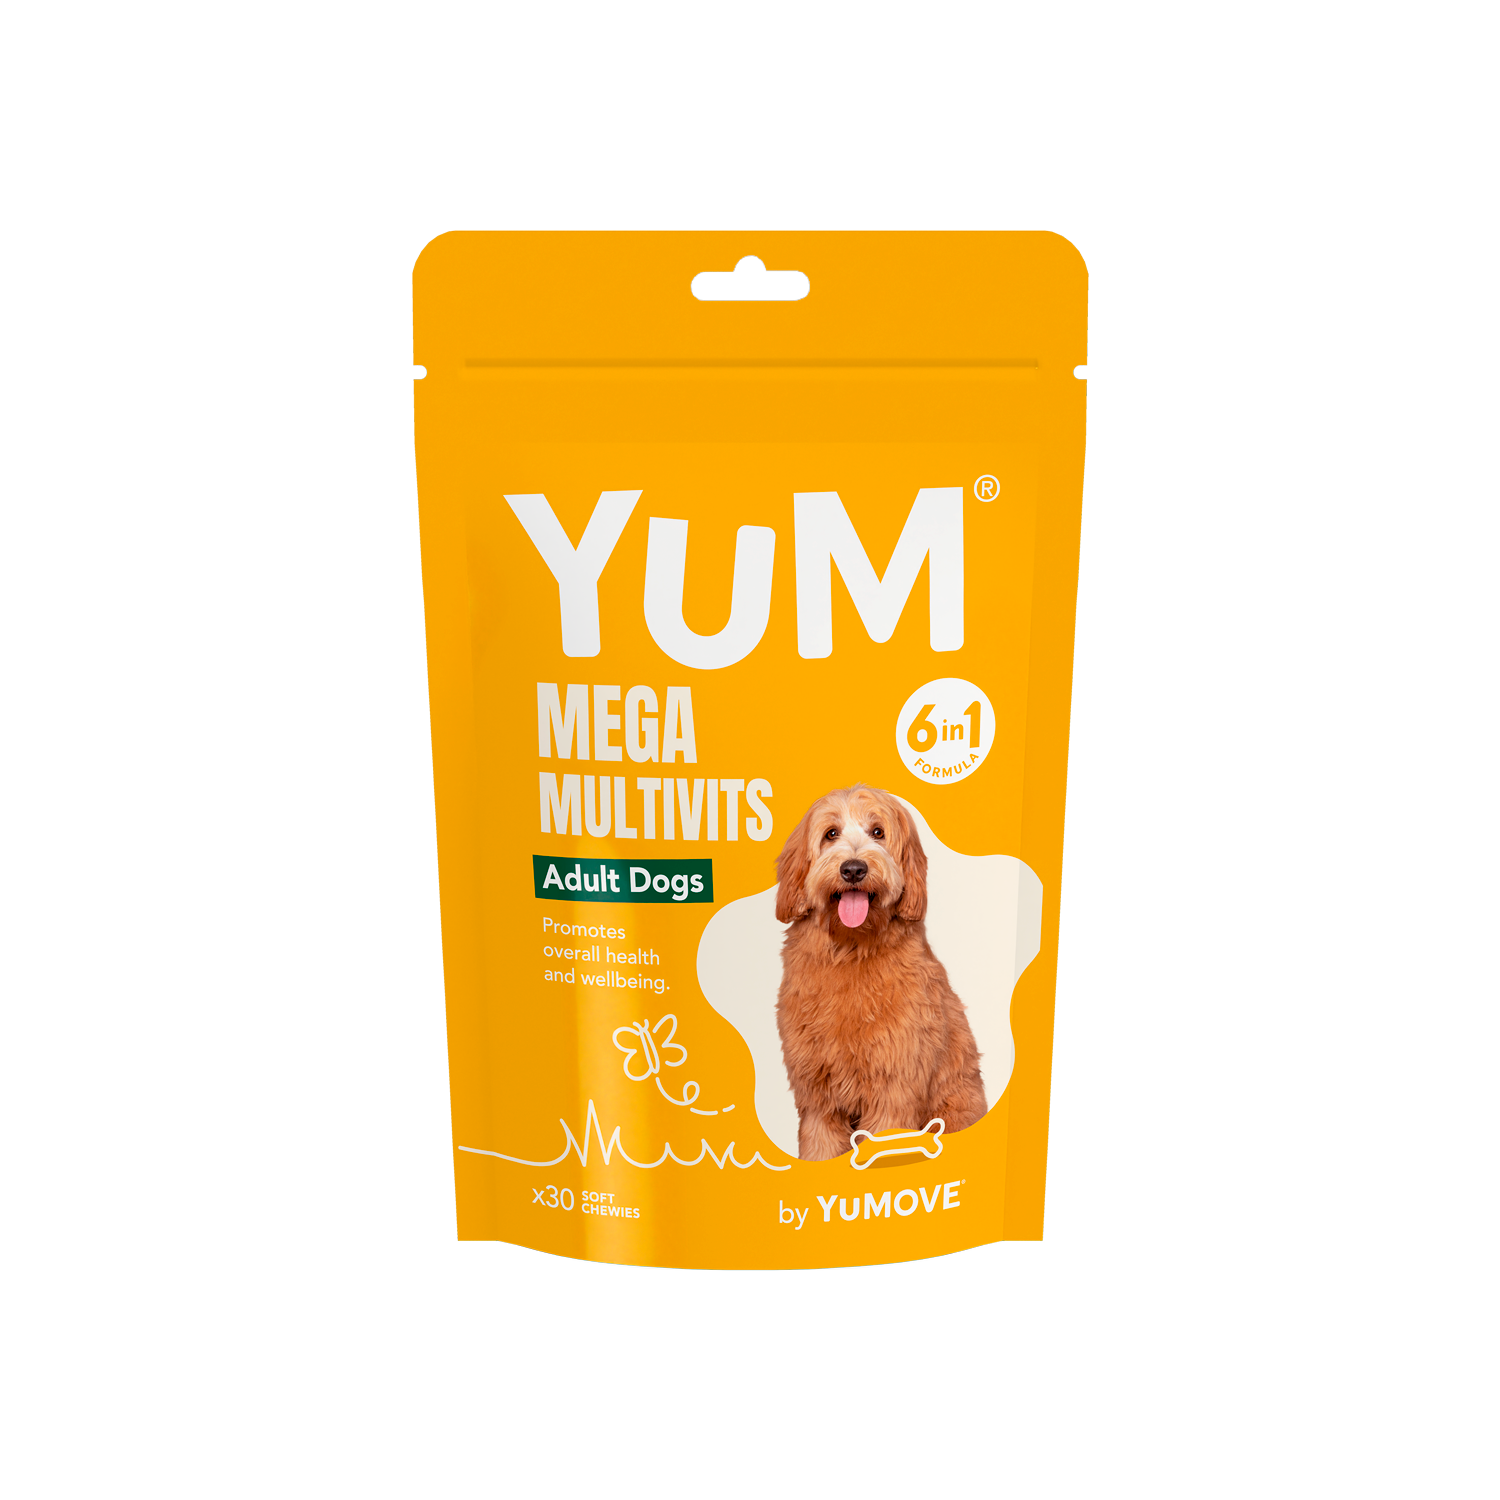 YuM MEGA Multivits Adult Dog